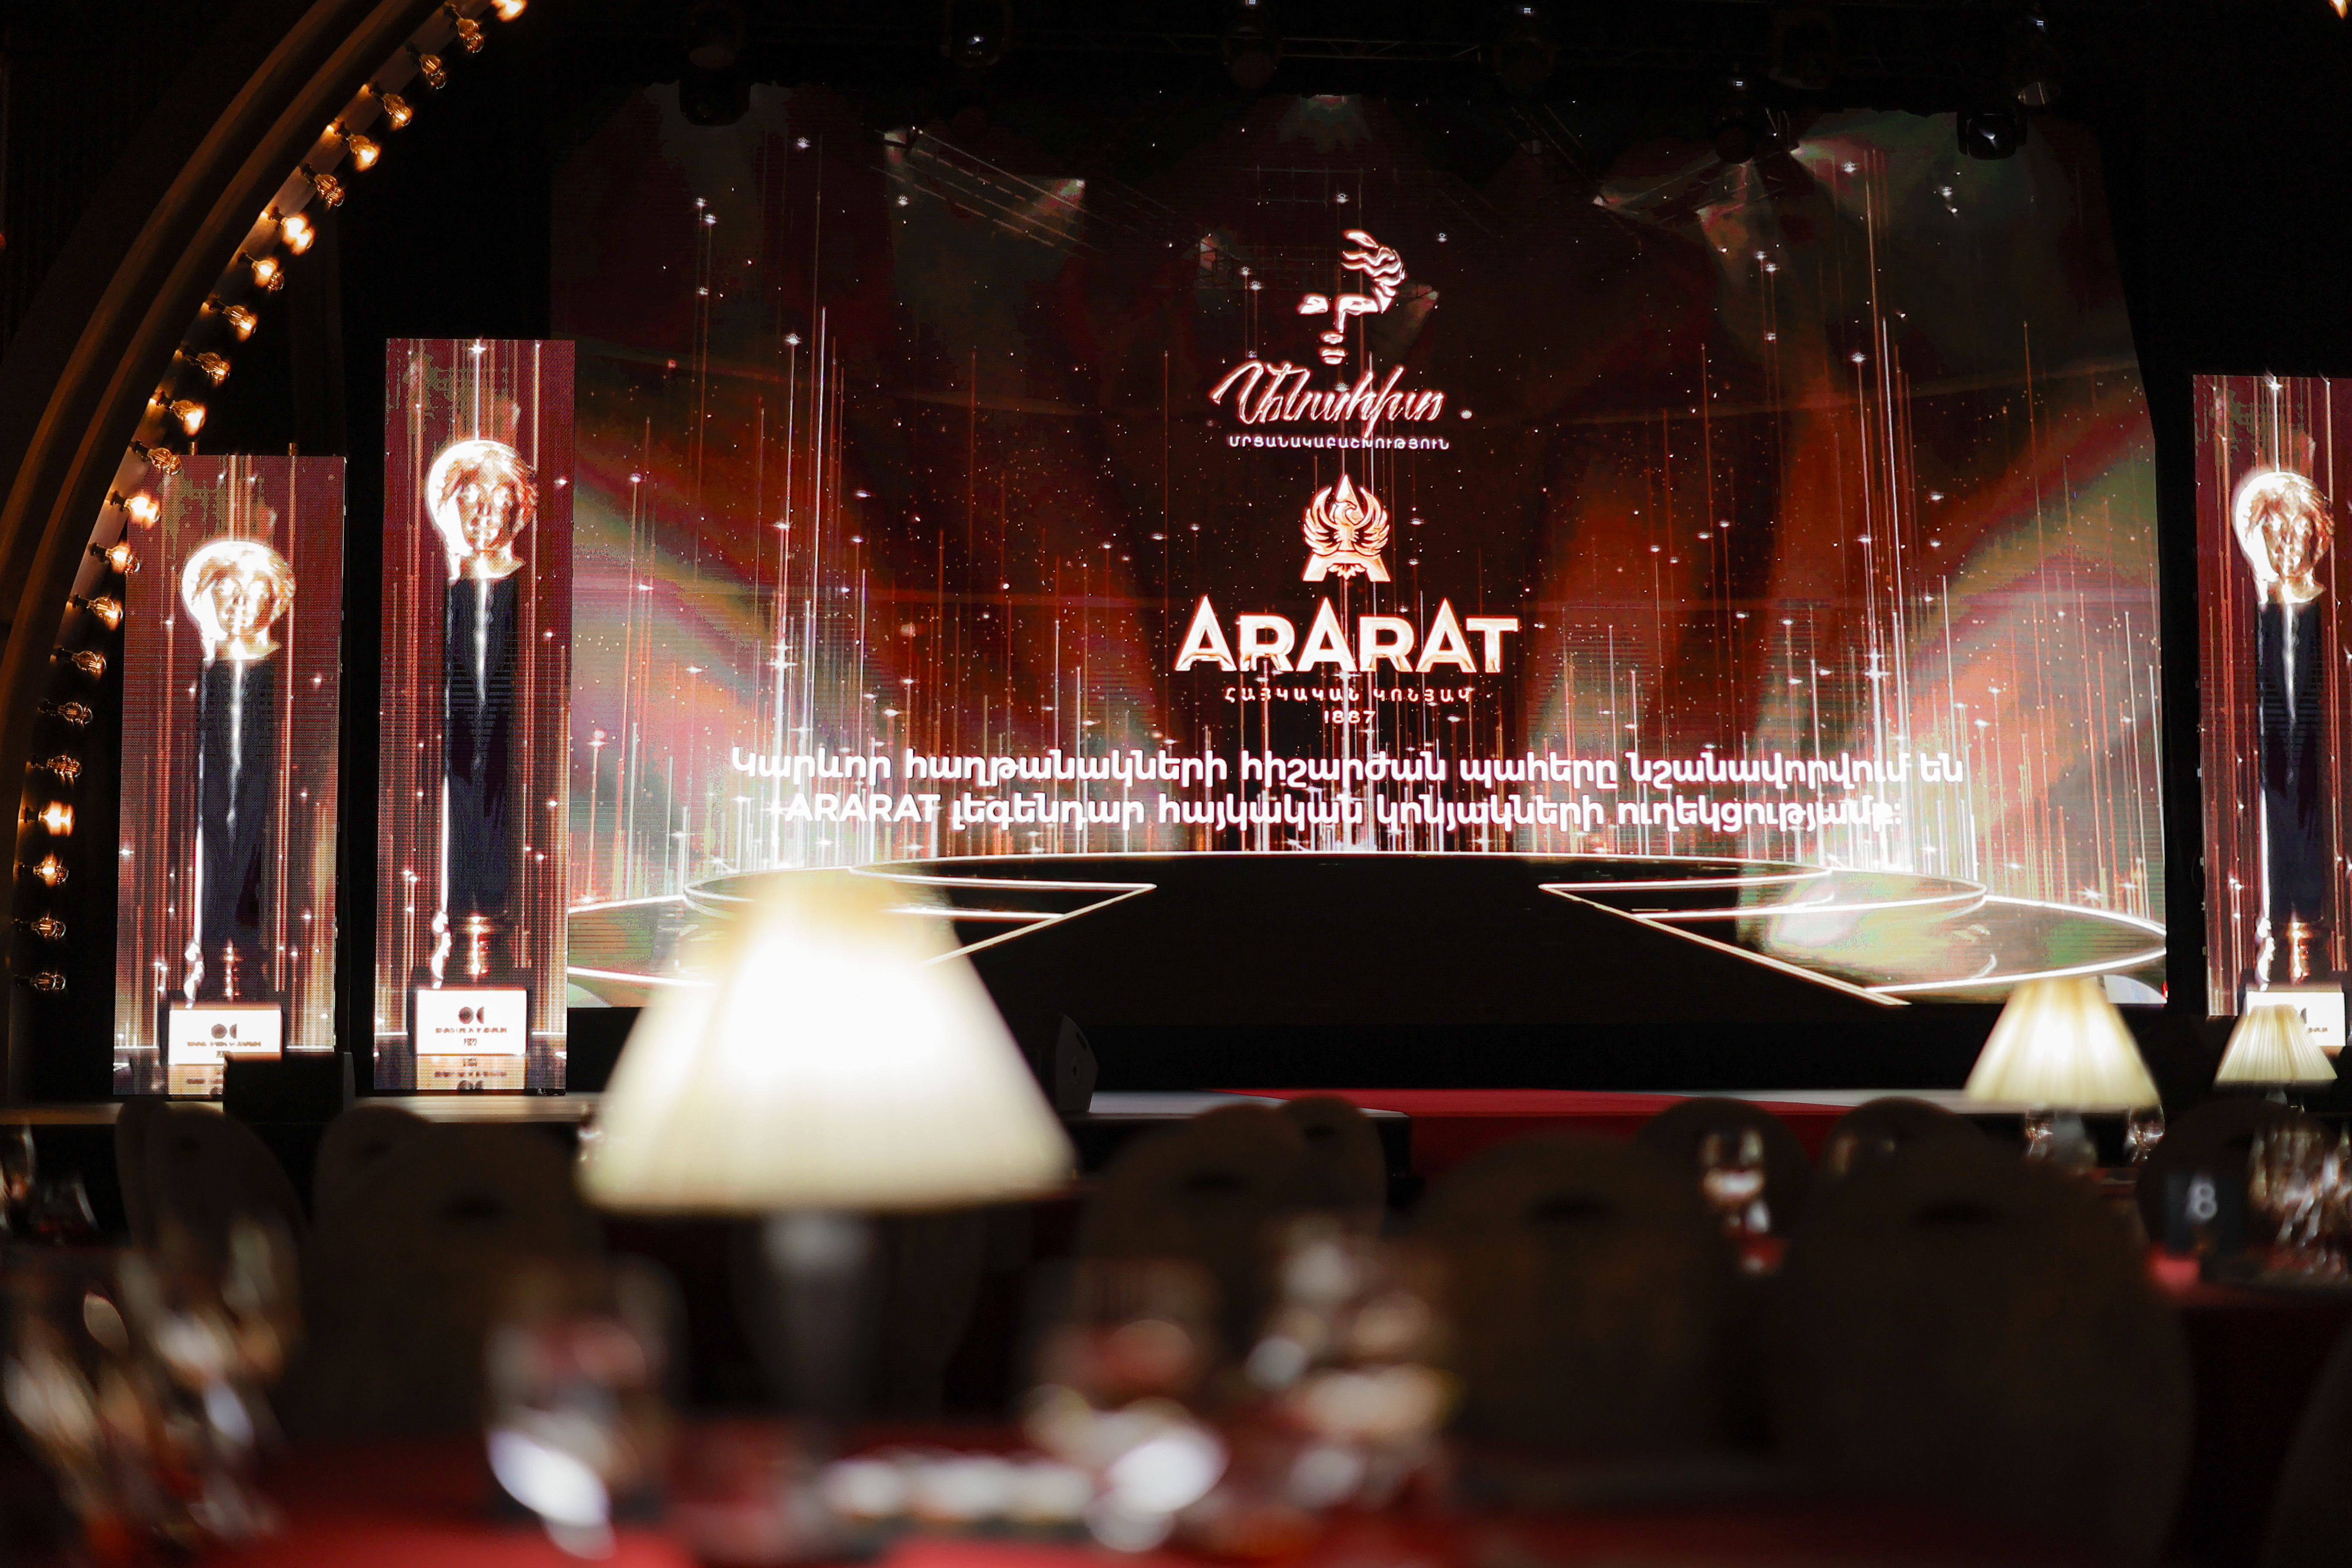 ARARAT as “Anahit” Film Awards Partner